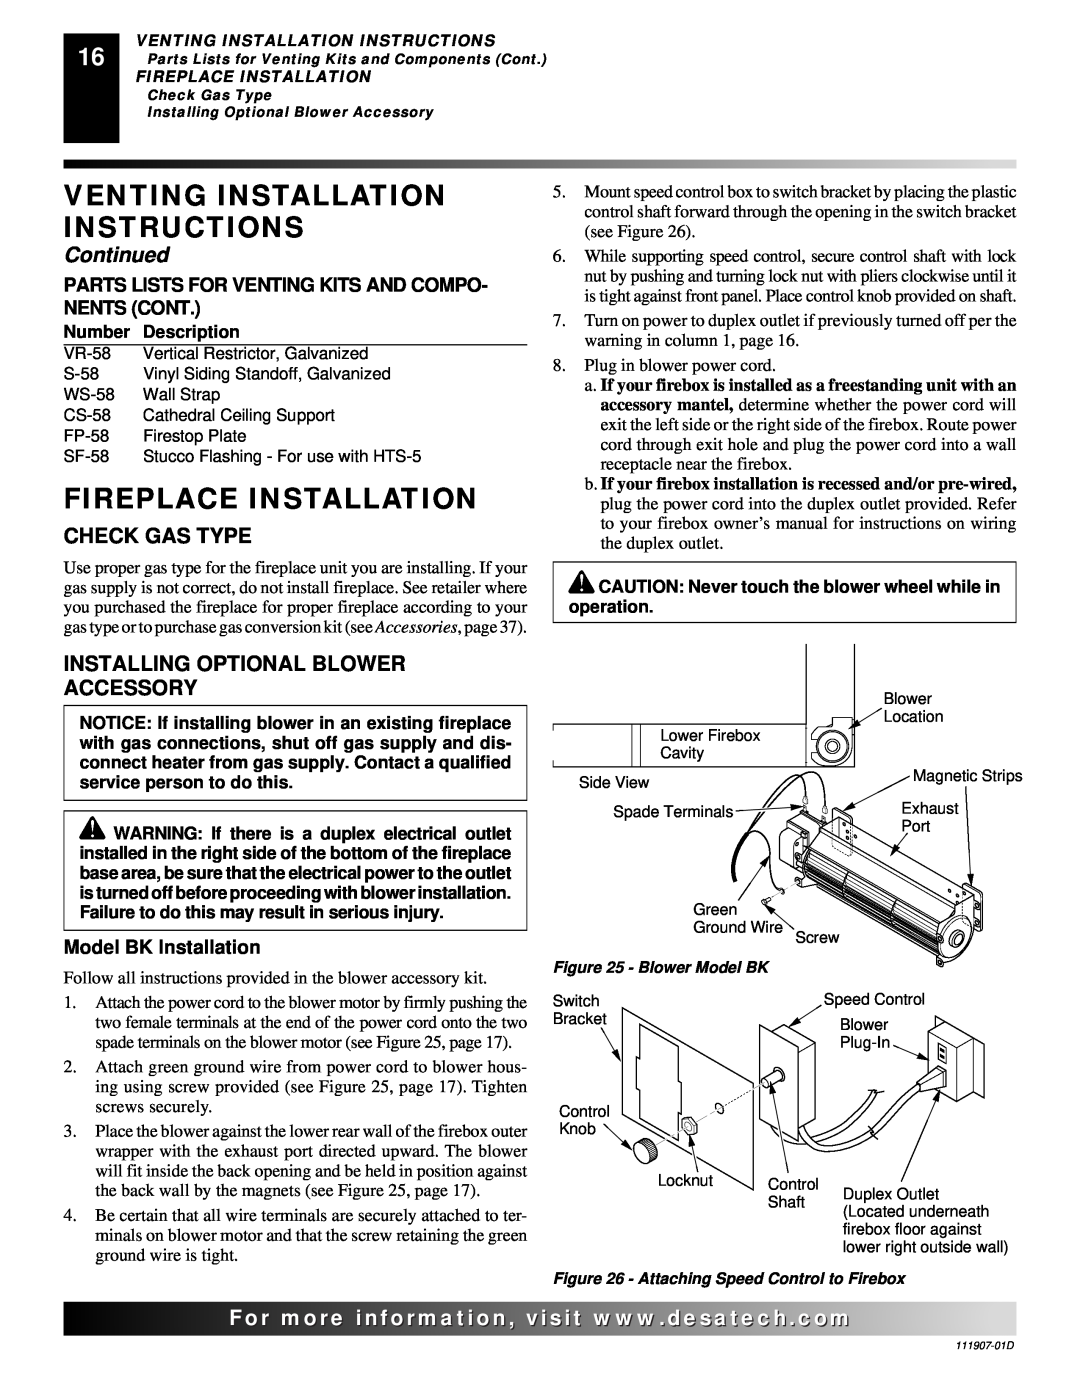 Desa VV42ENB(1) Fireplace Installation, Venting Installation Instructions, Continued, For..com, Model BK Installation 